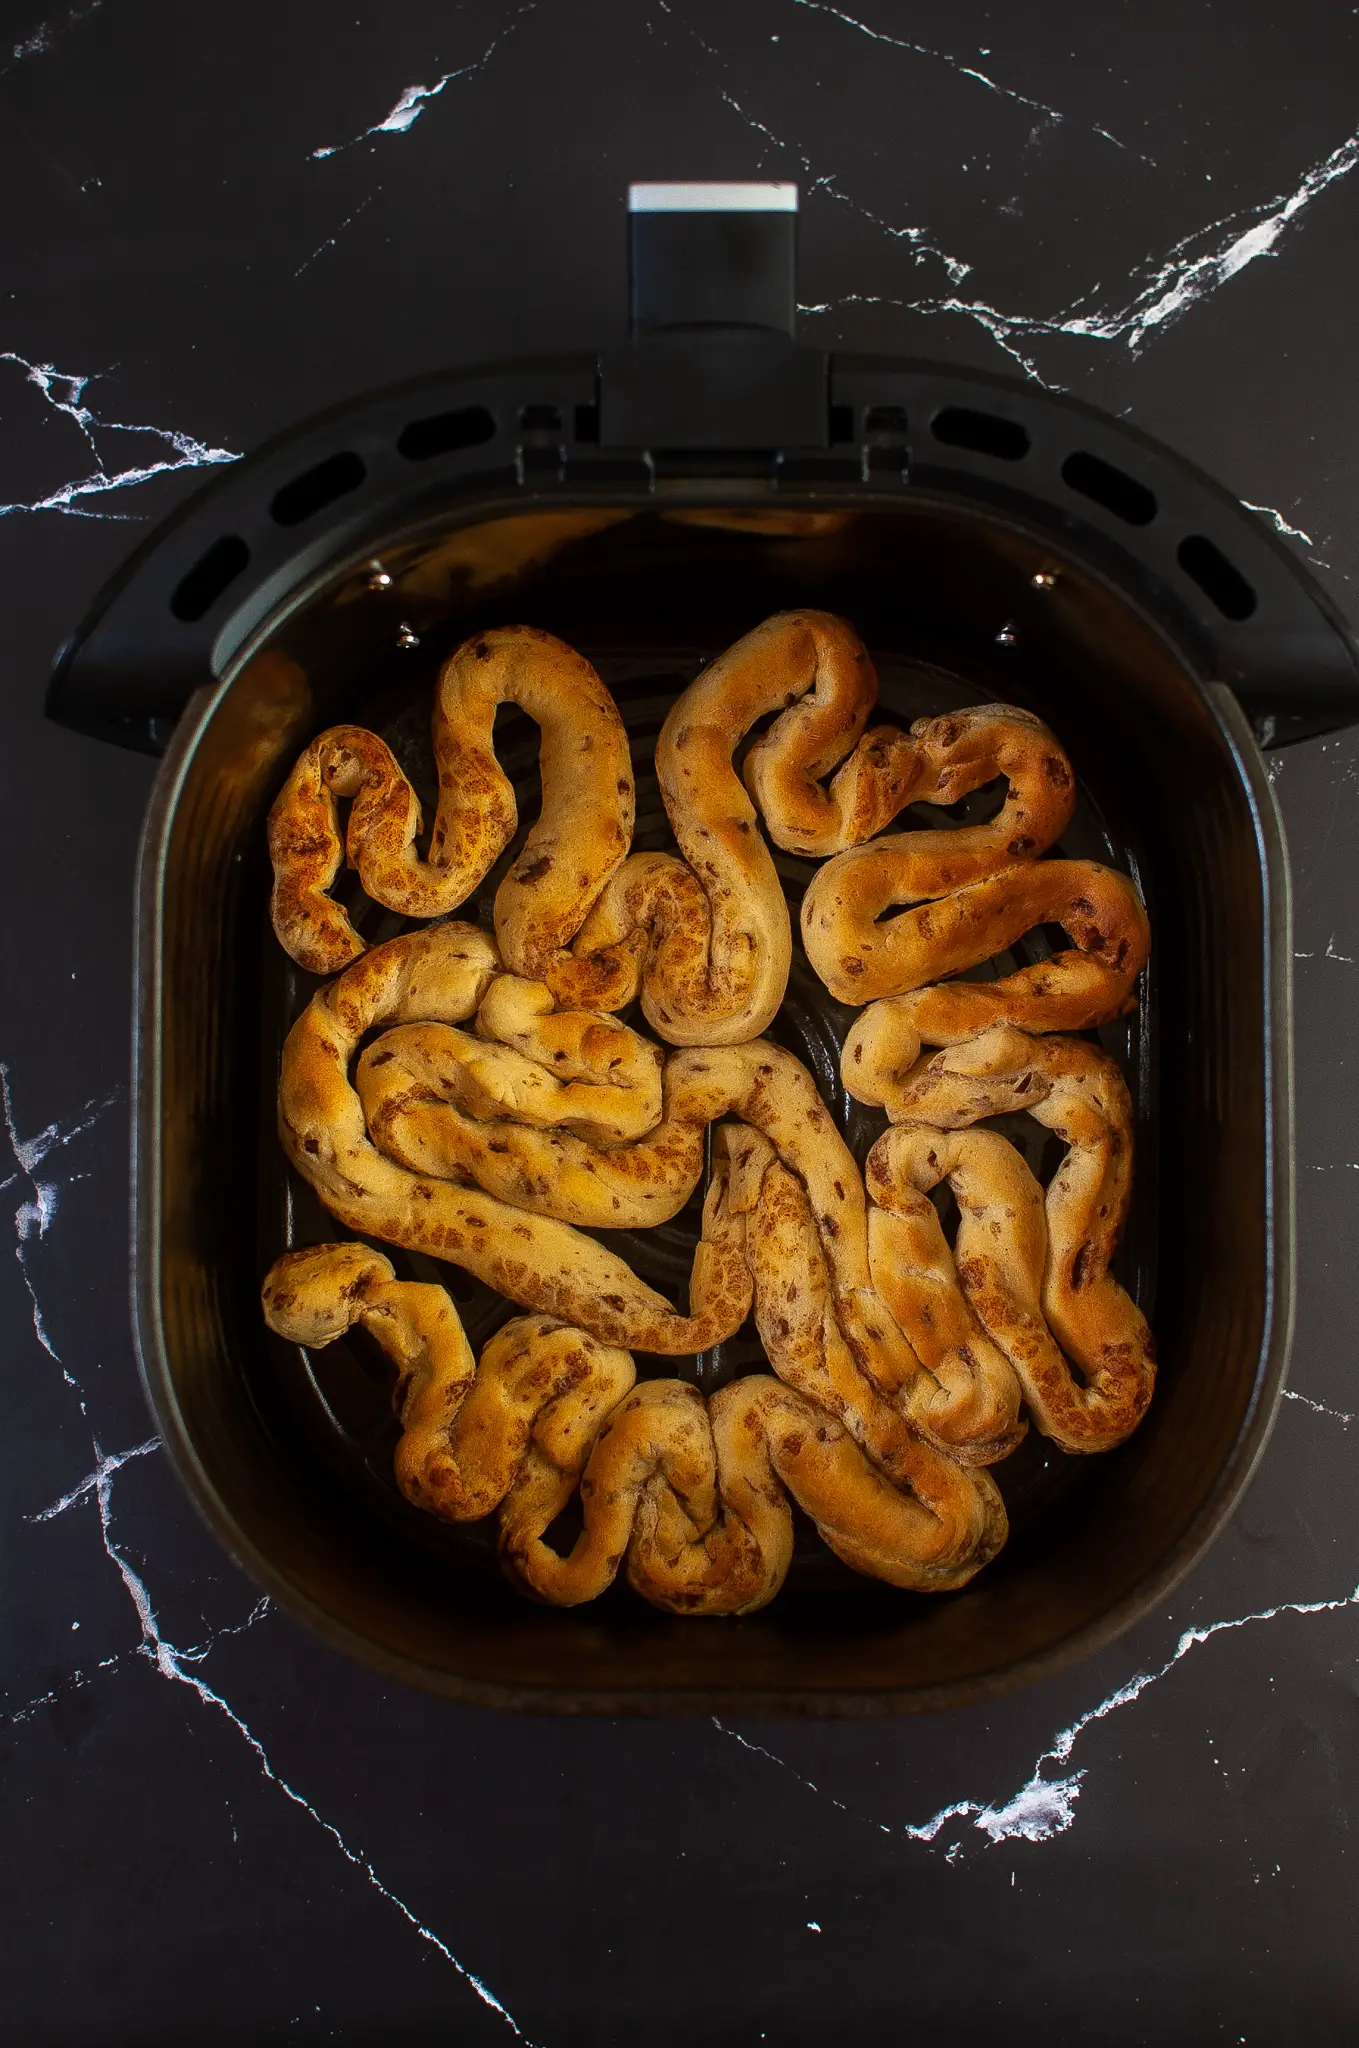 Cinnamon rolls cooked in air fryer